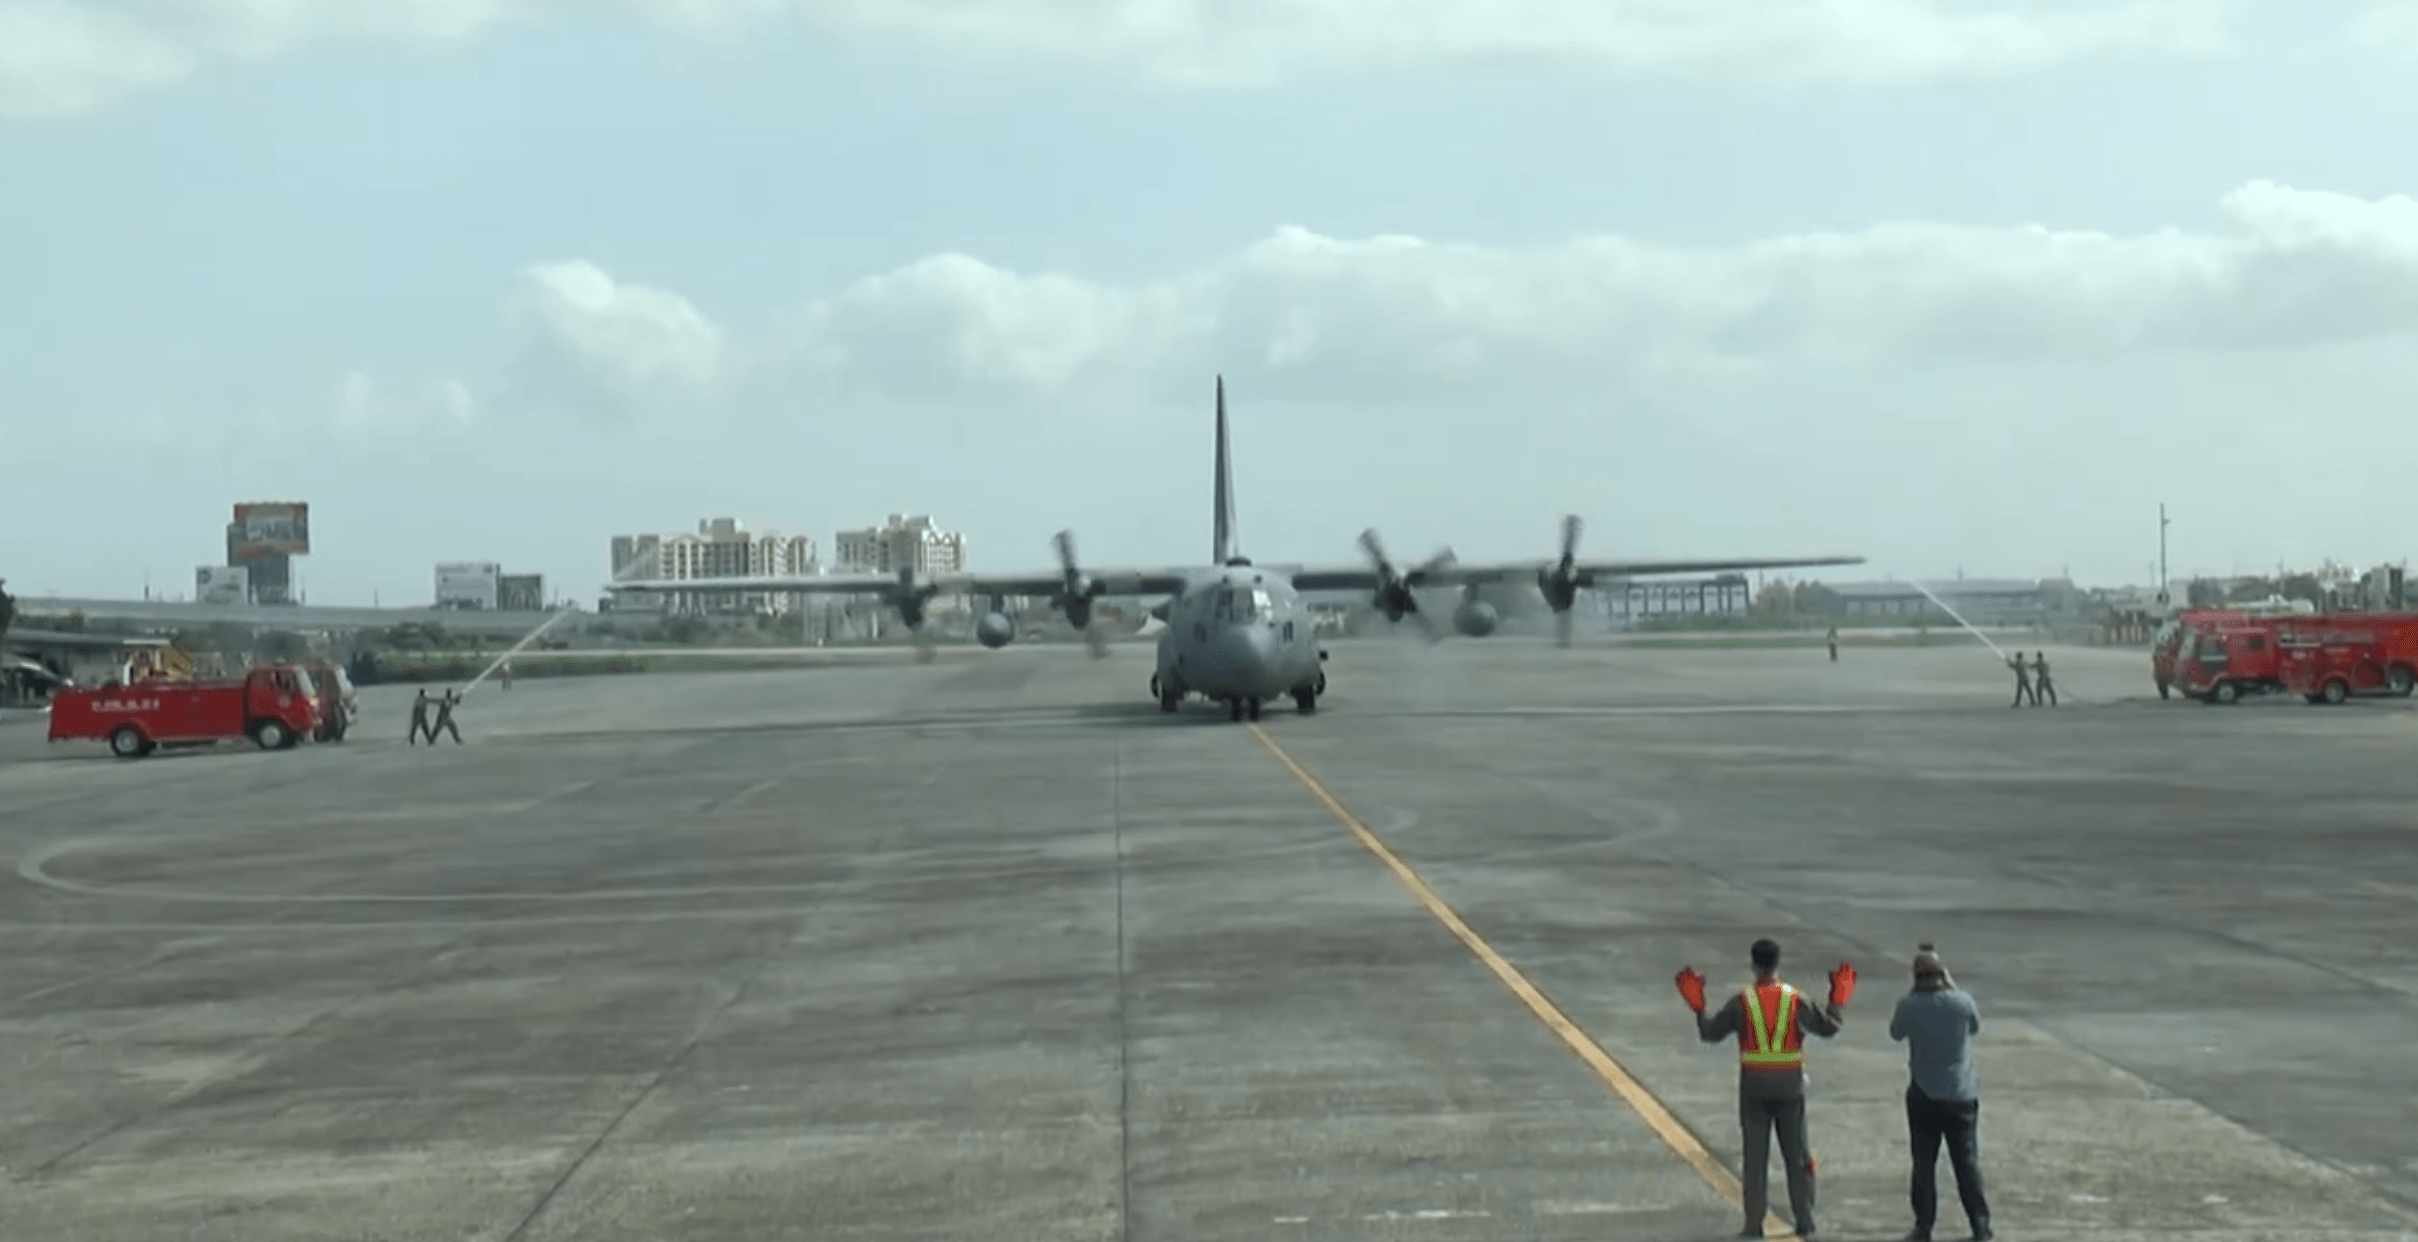 AFP: Crashed C-130 was not overloaded